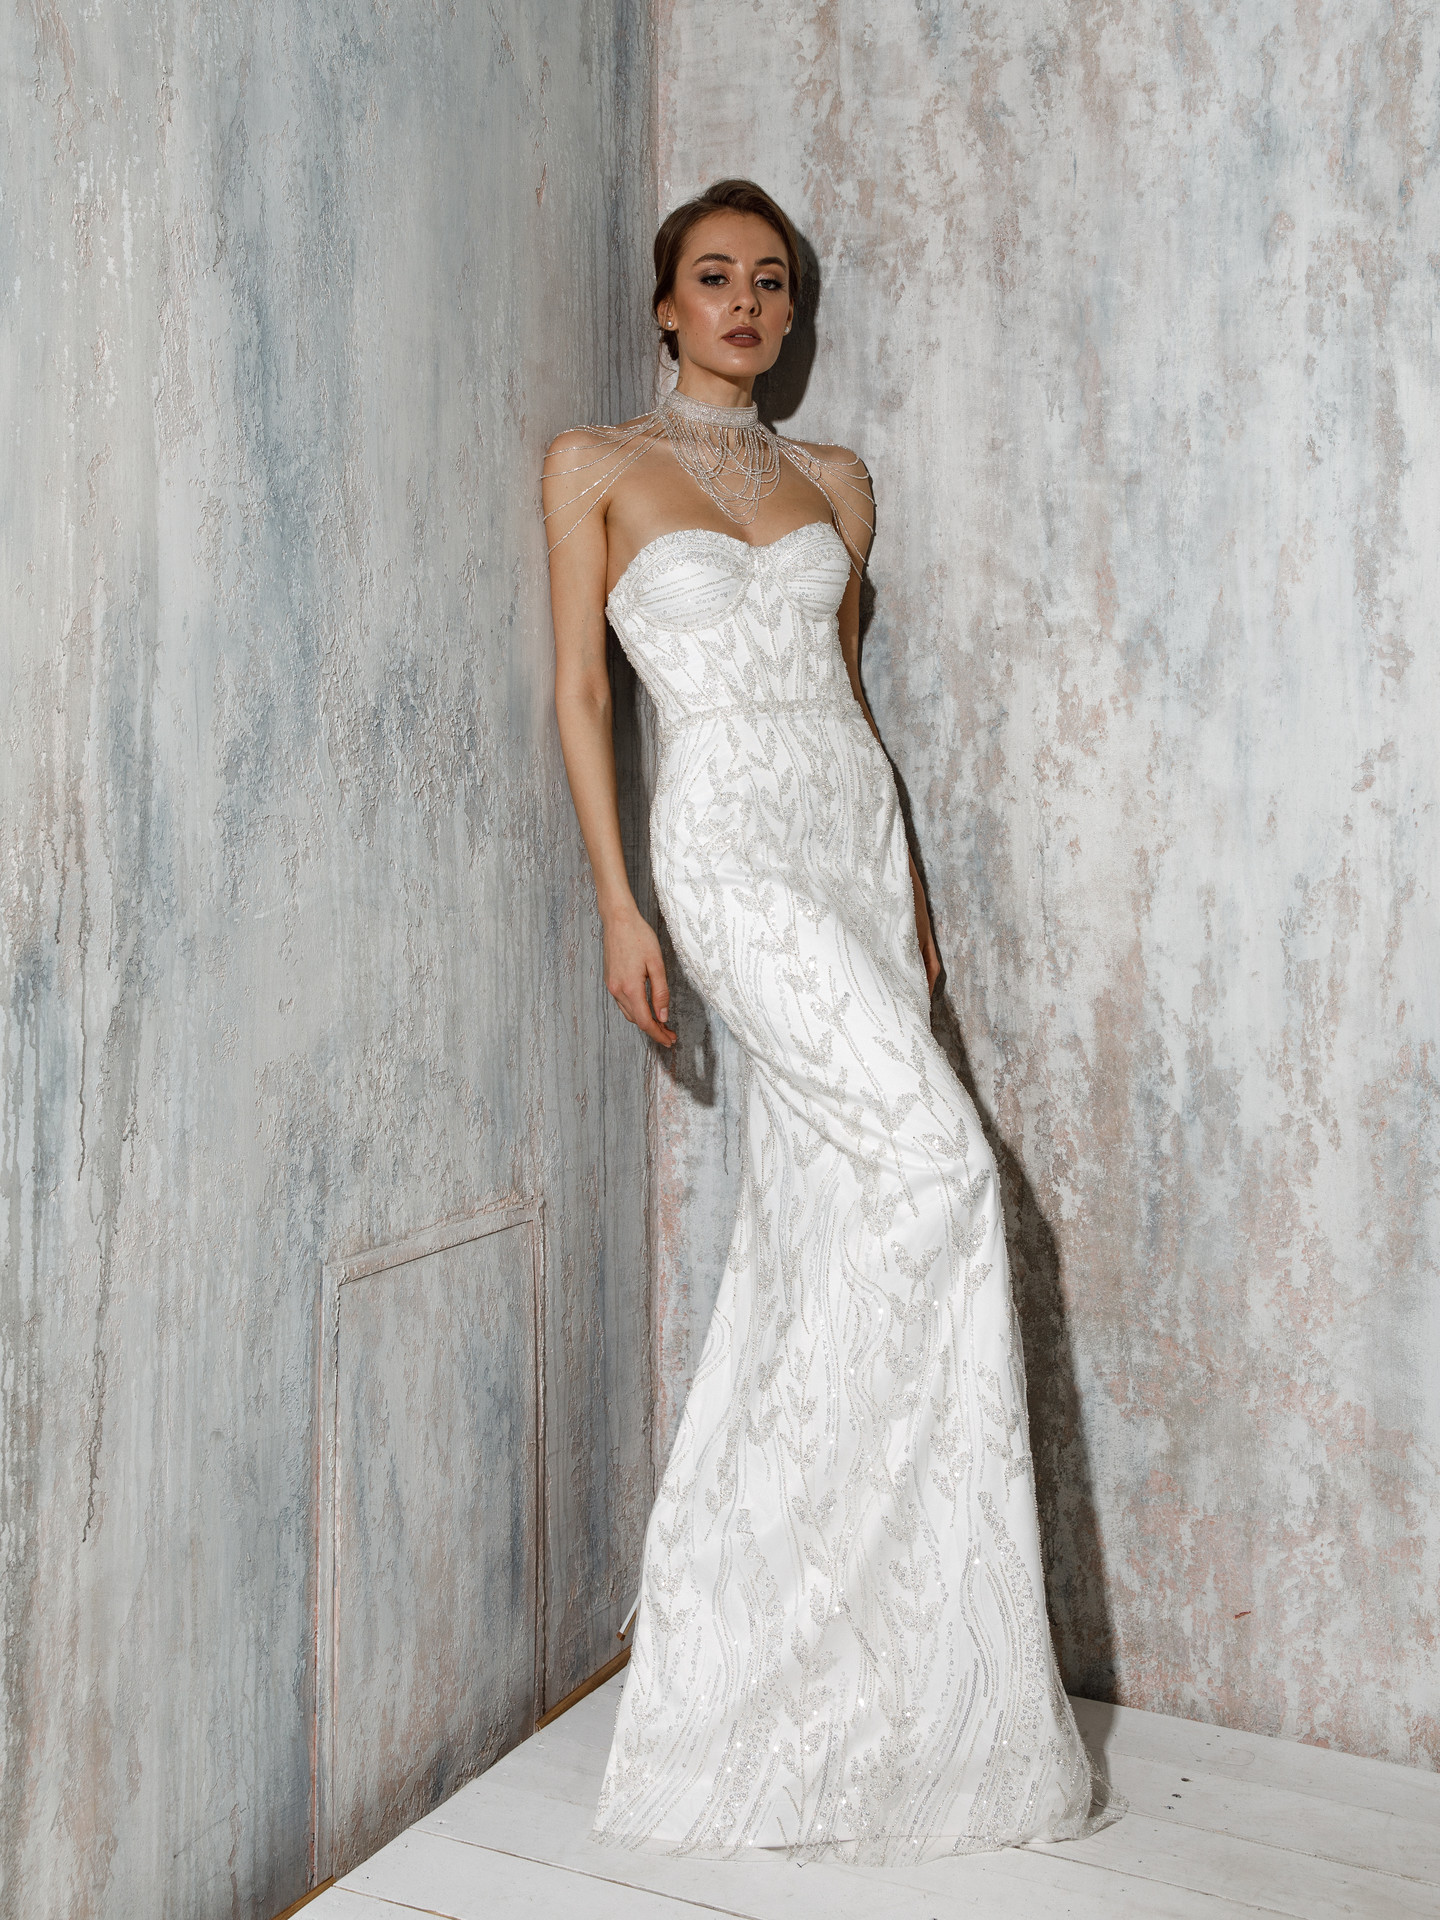 Andrea gown, 2021, couture, dress, bridal, off-white, lace, Andrea, sheath silhouette, lacing corset, popular